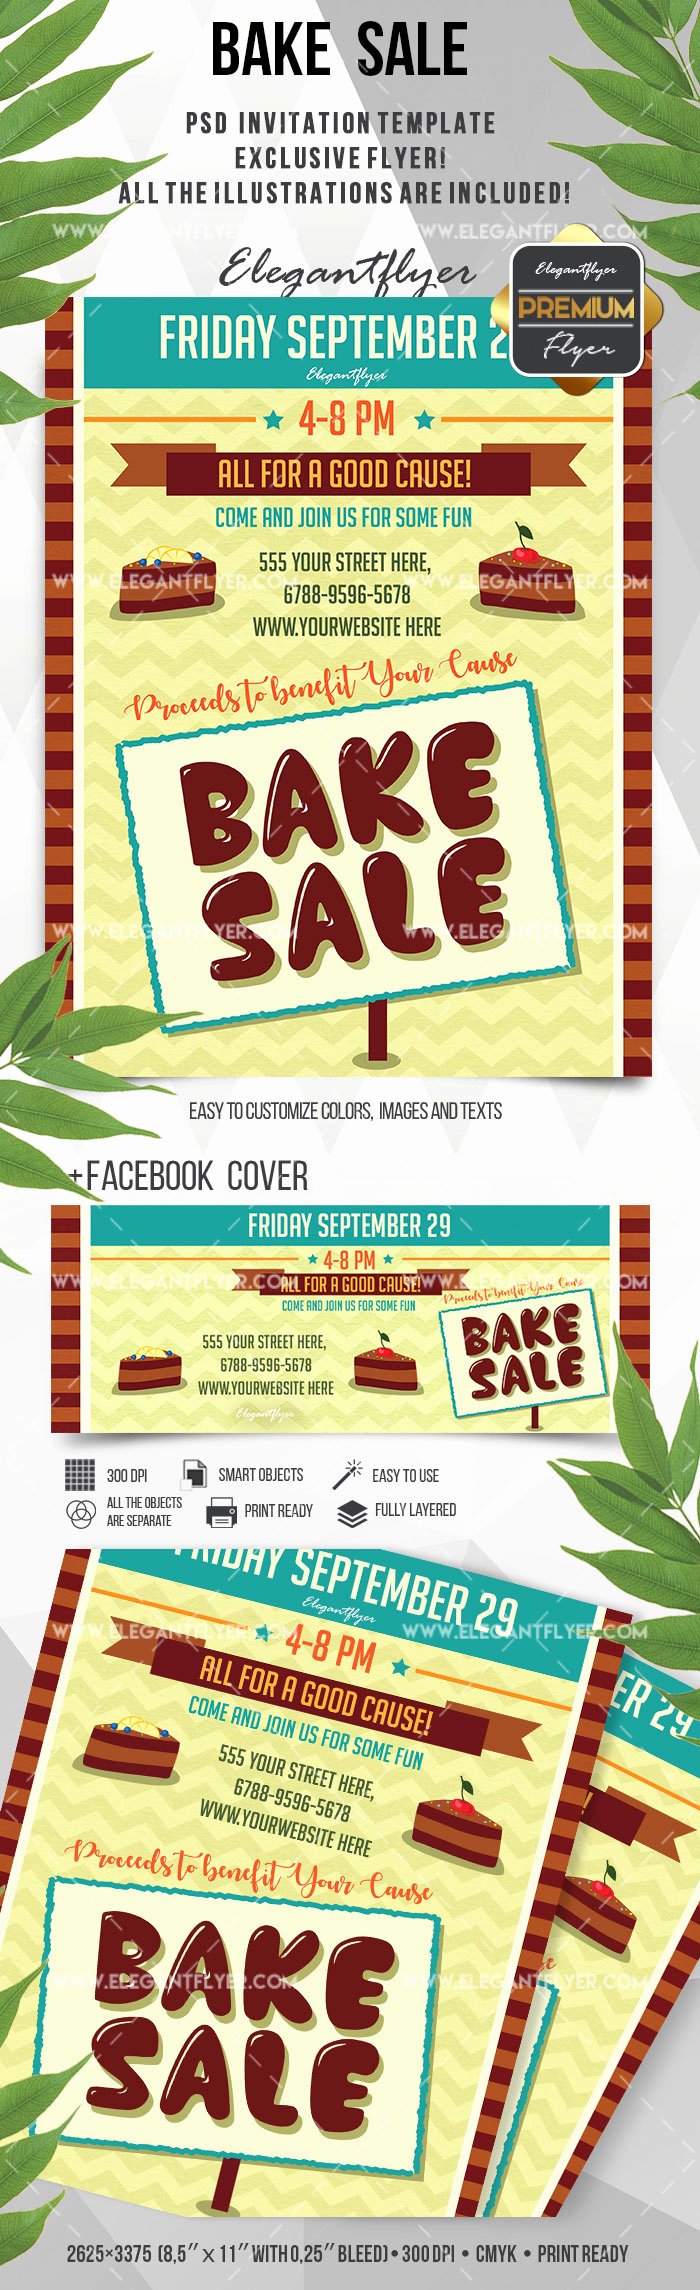 Flyer for Bake Sale Bakery – by Elegantflyer